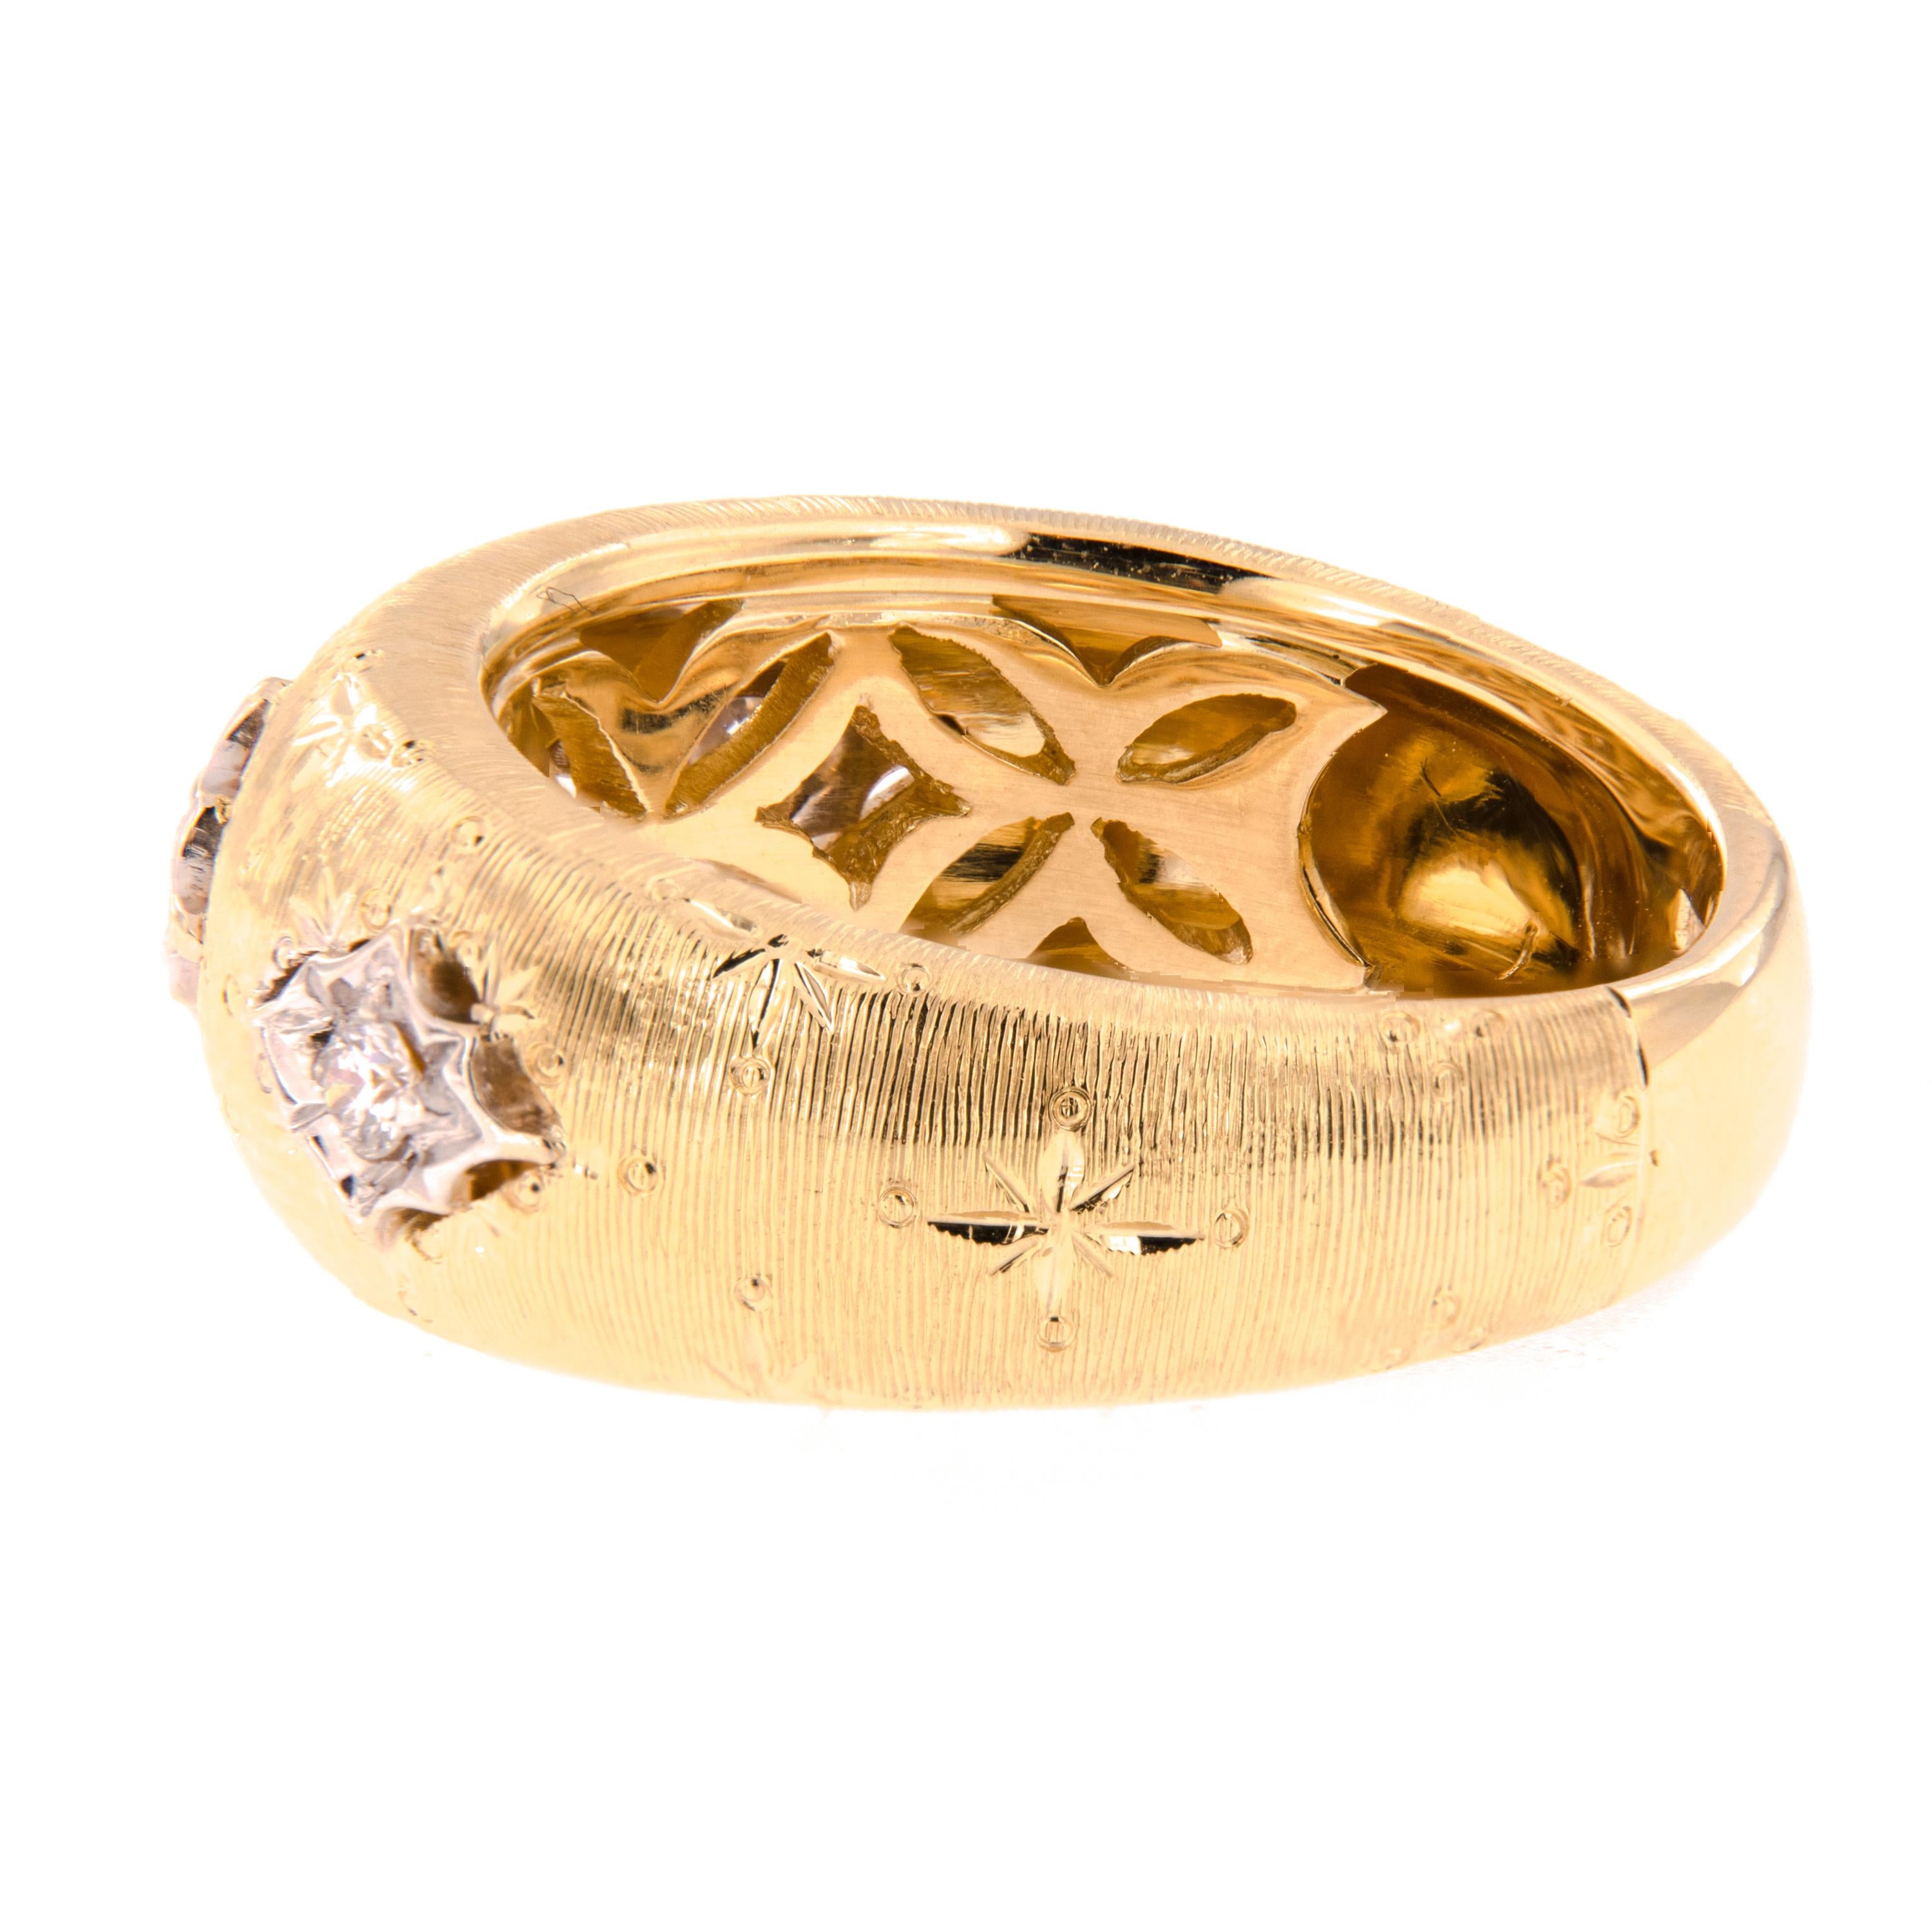 Renaissance Revival Italian 18 Karat Yellow Gold and Diamond Dome Band Ring